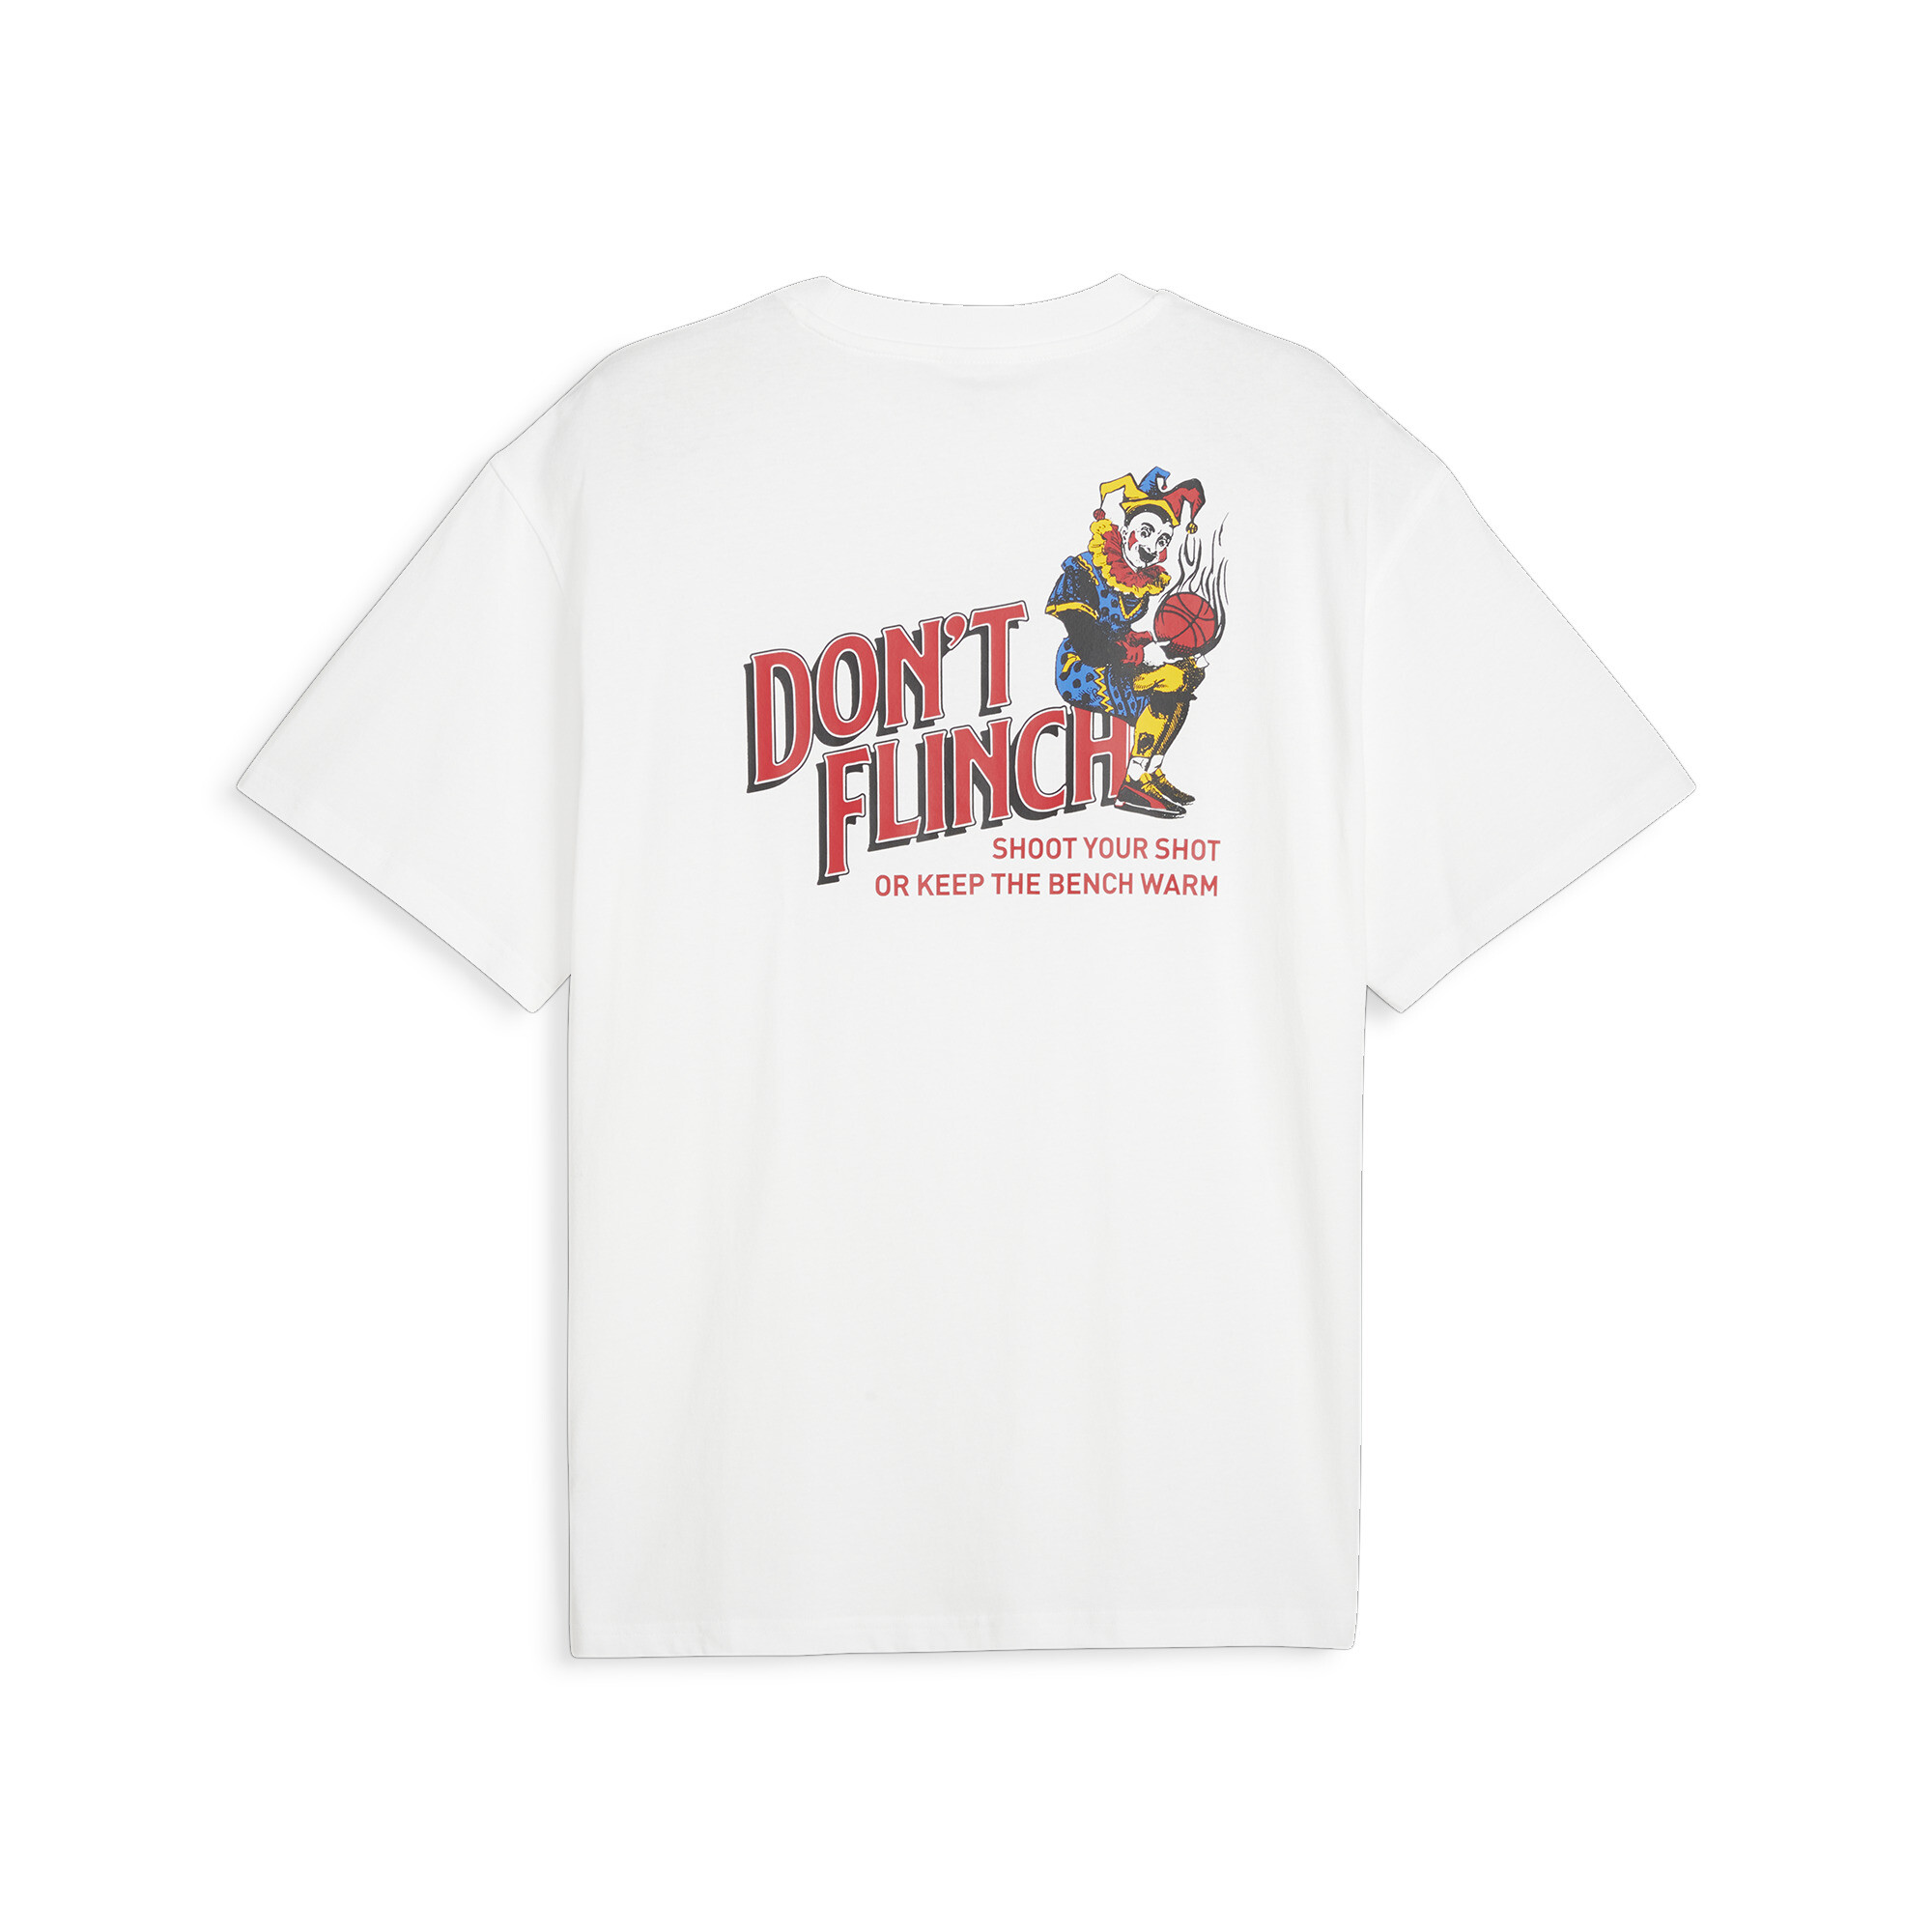 Men's PUMA The Joker Basketball T-Shirt In 20 - White, Size XS